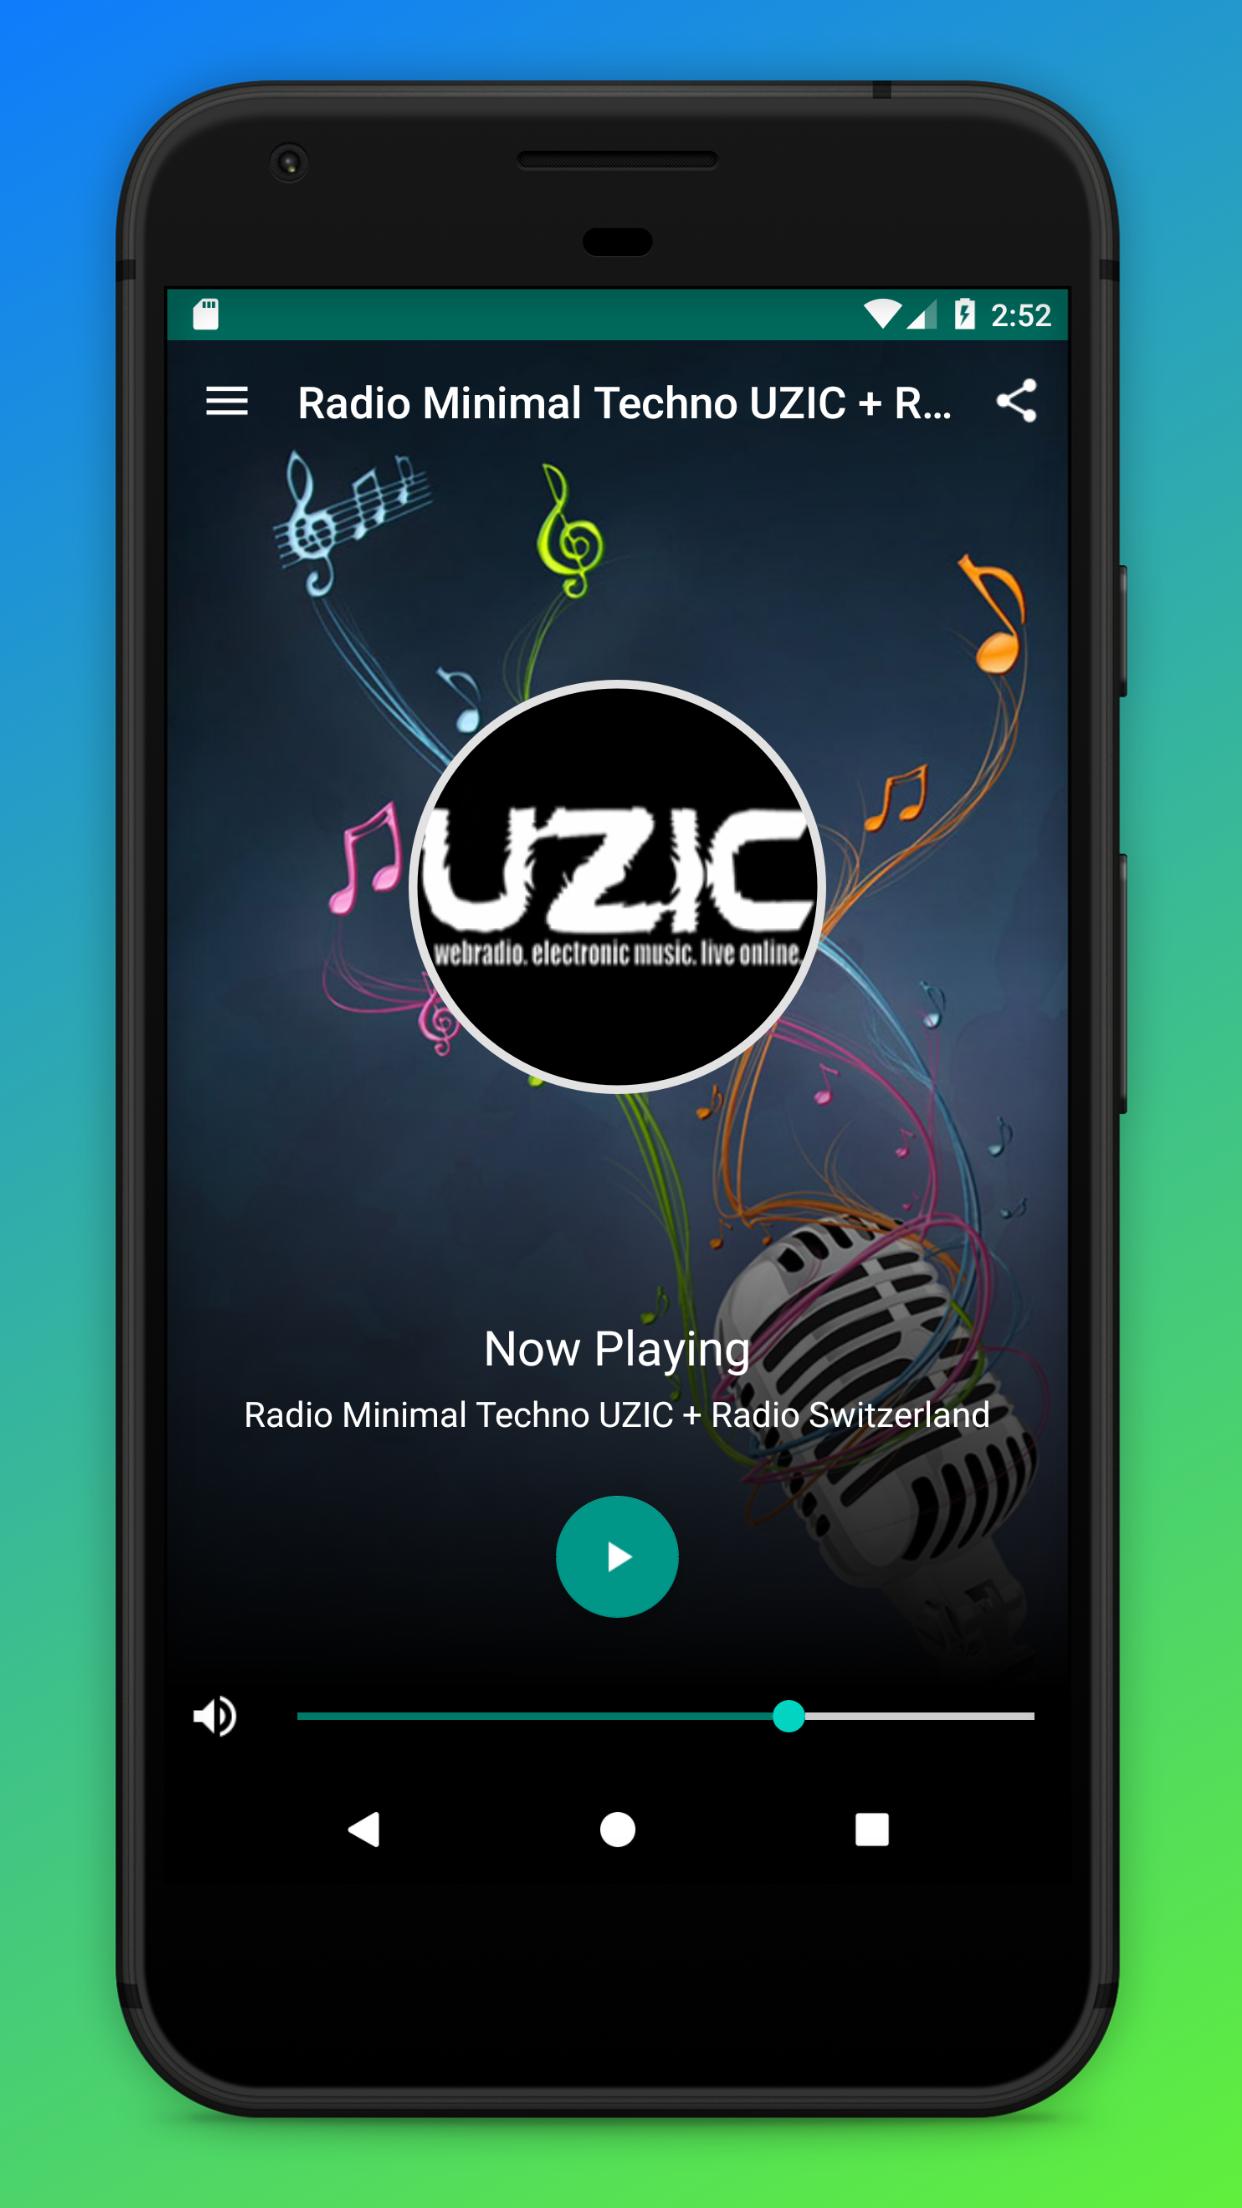 Radio Minimal Techno UZIC + Radio Switzerland for Android - APK Download